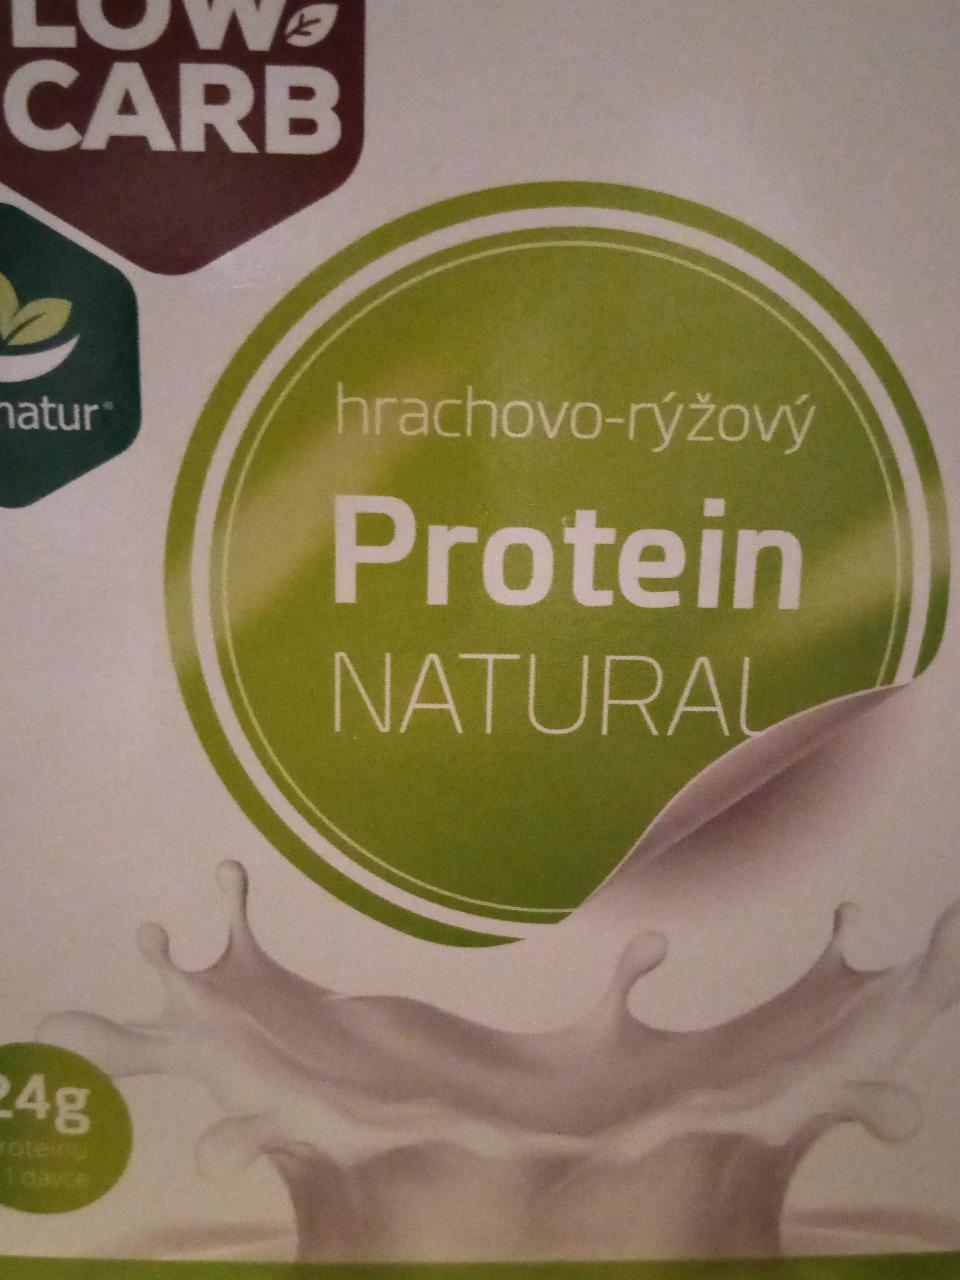 Fotografie - Low Carb Protein natural hrachovo-rýžový Topnatur